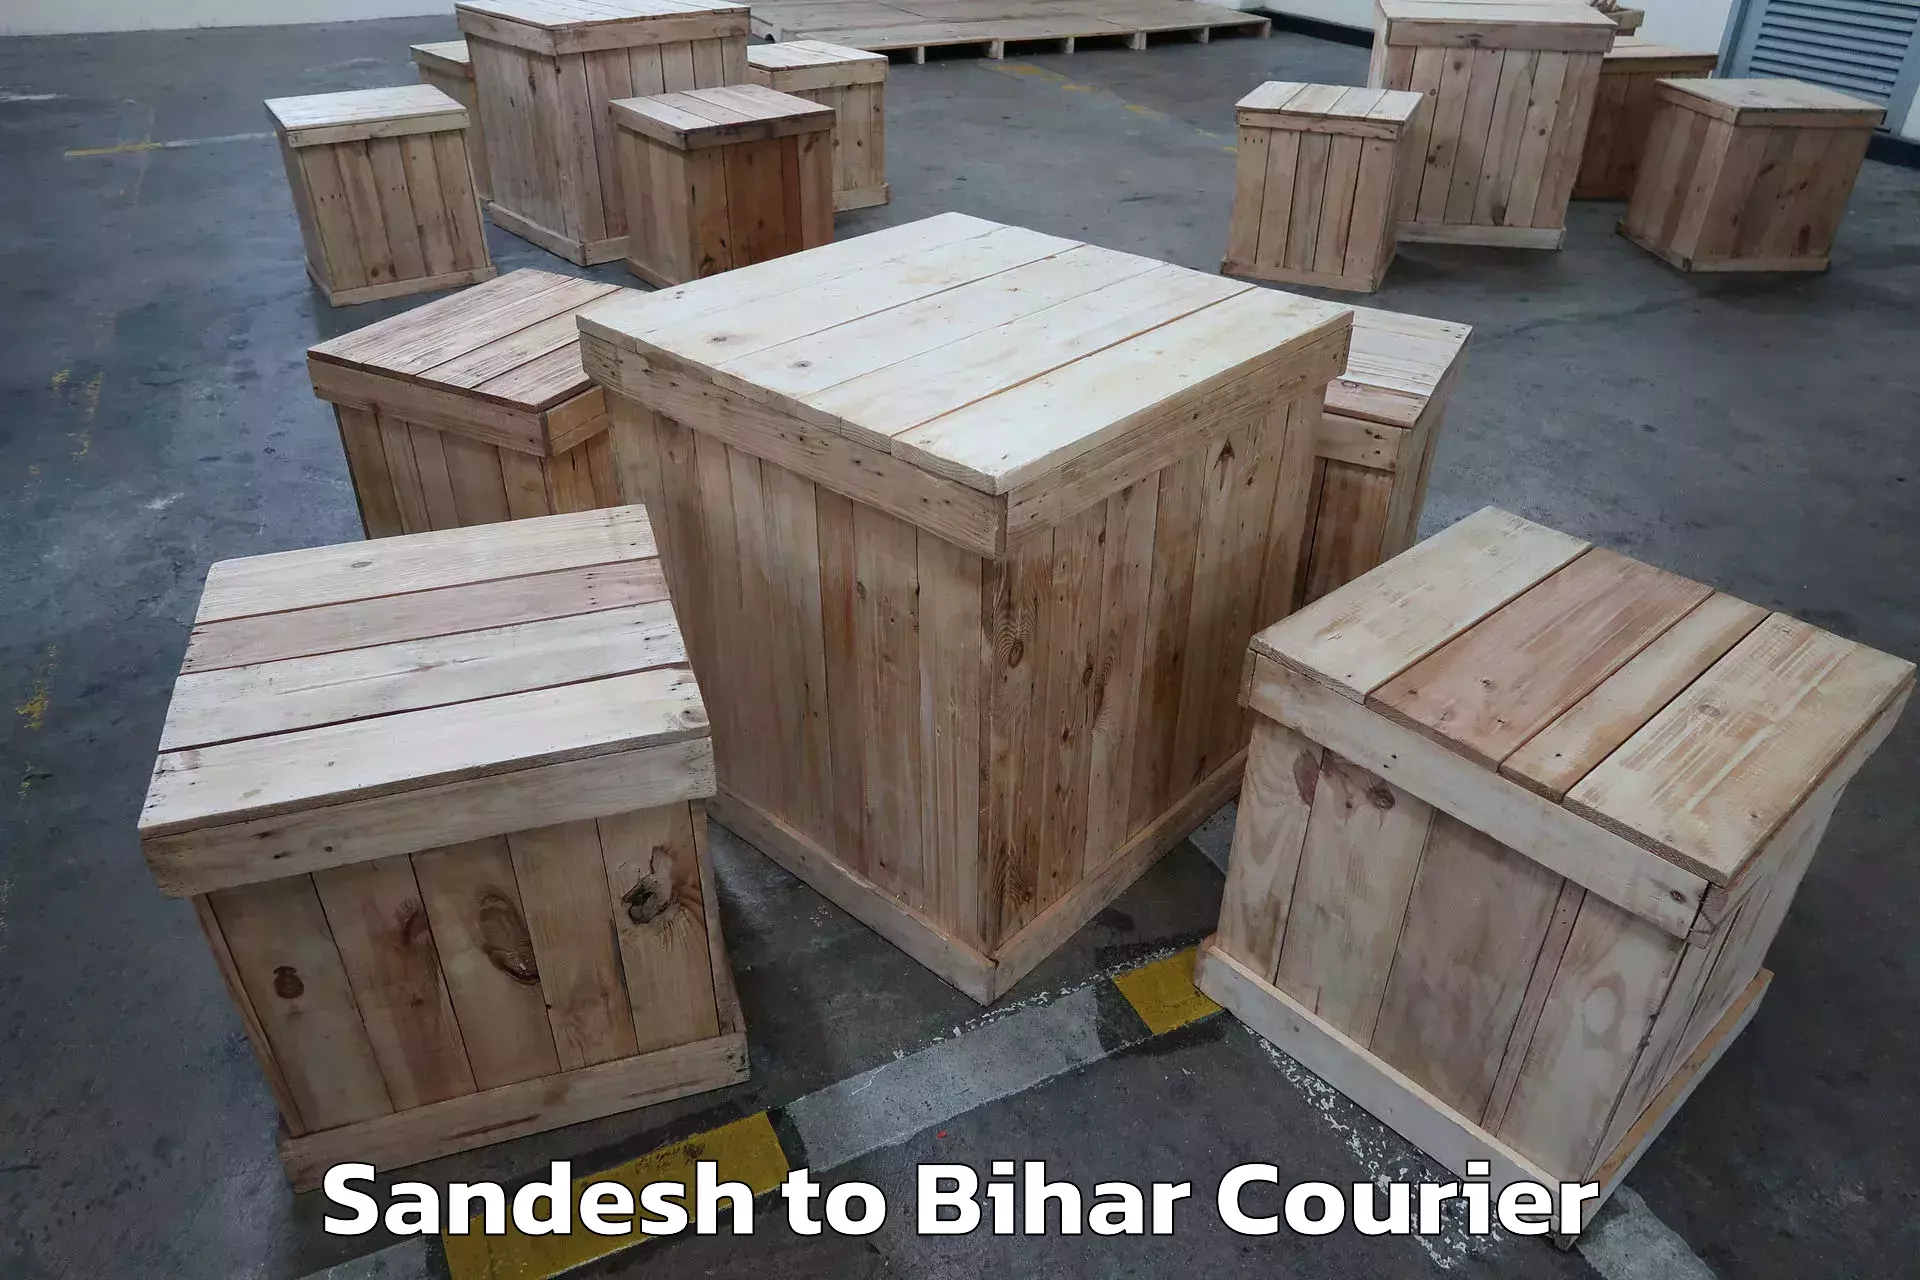 Professional moving company Sandesh to Bihar